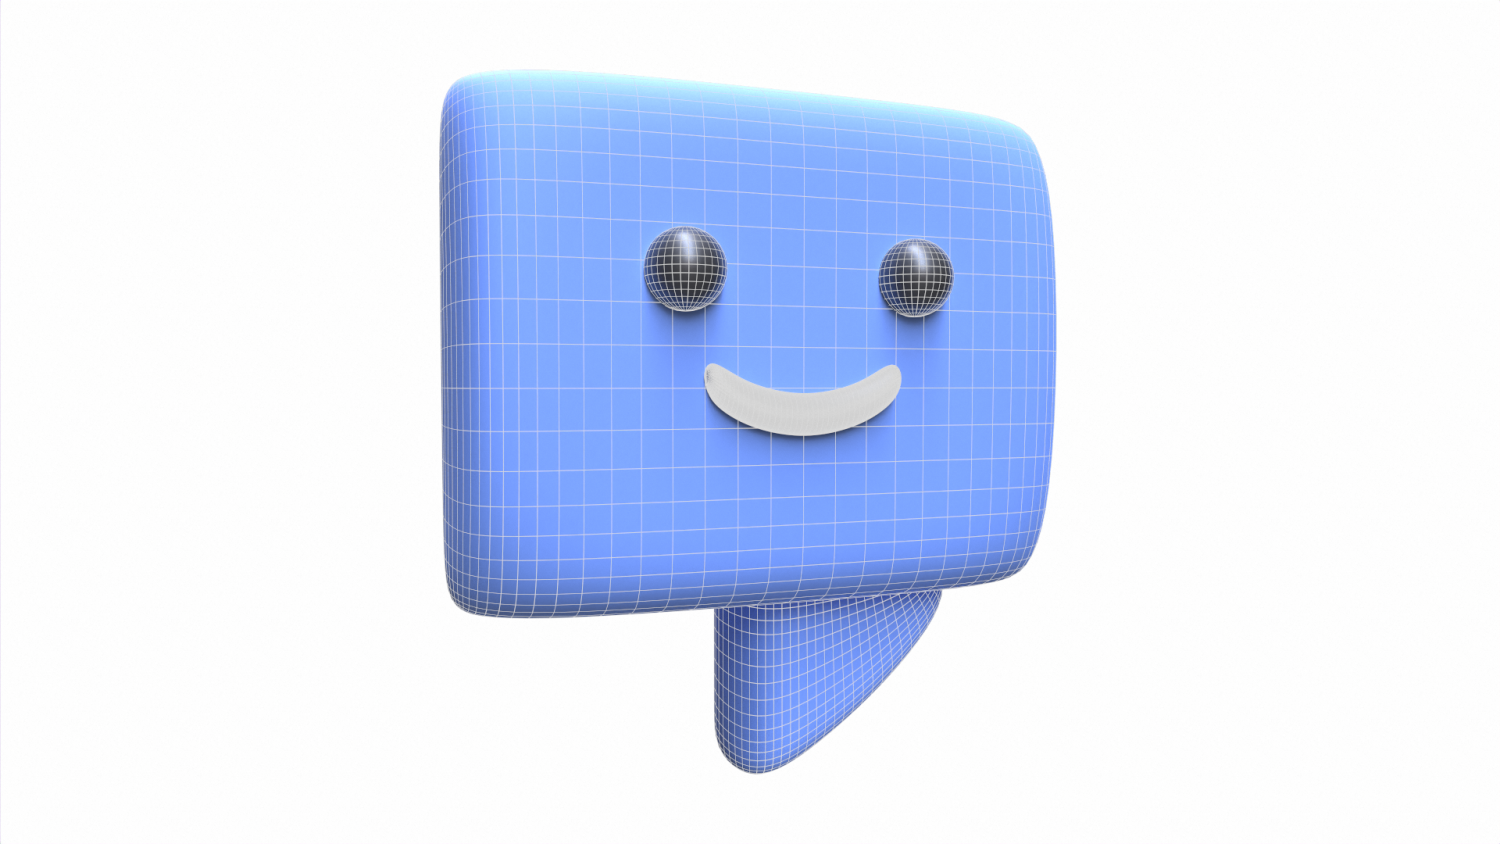 Blue Emoji - Roblox